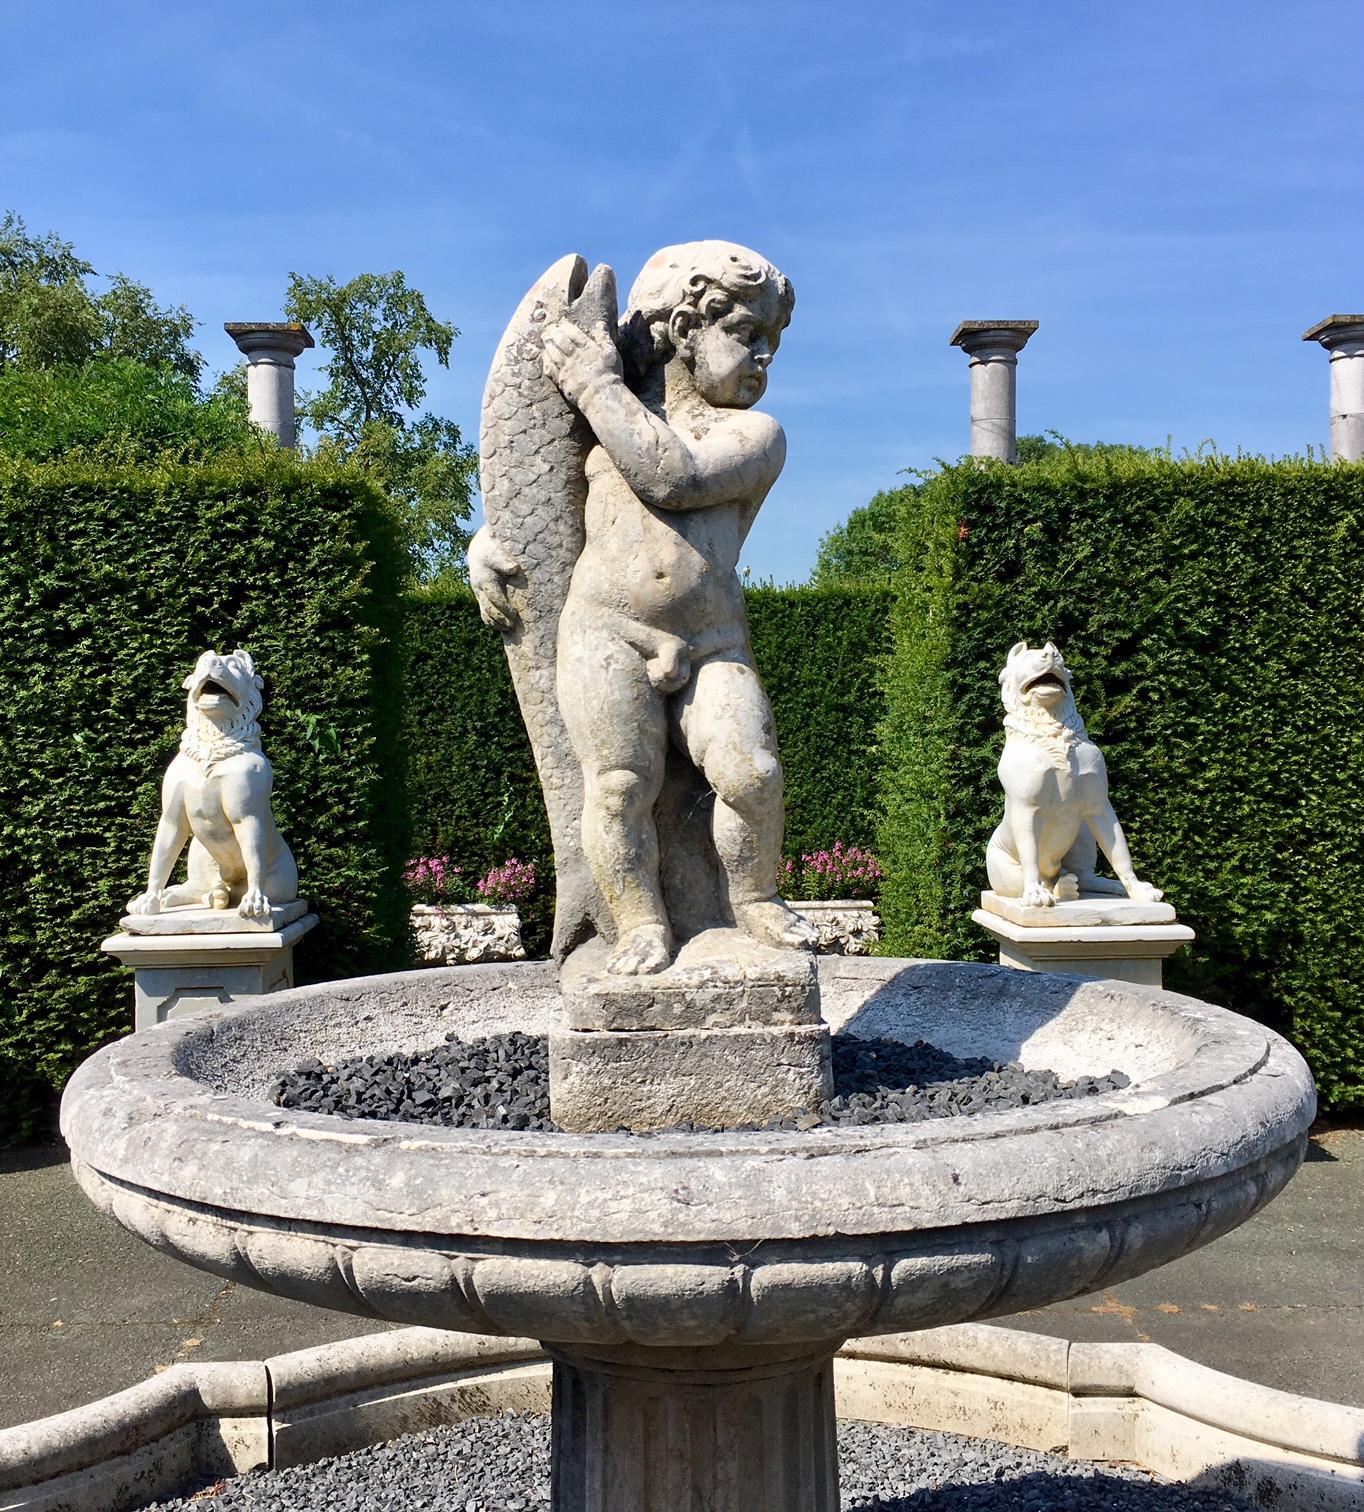 Rococo Antique 19th Century Sculpted Decorative Garden Fountain in Marble and Limestone